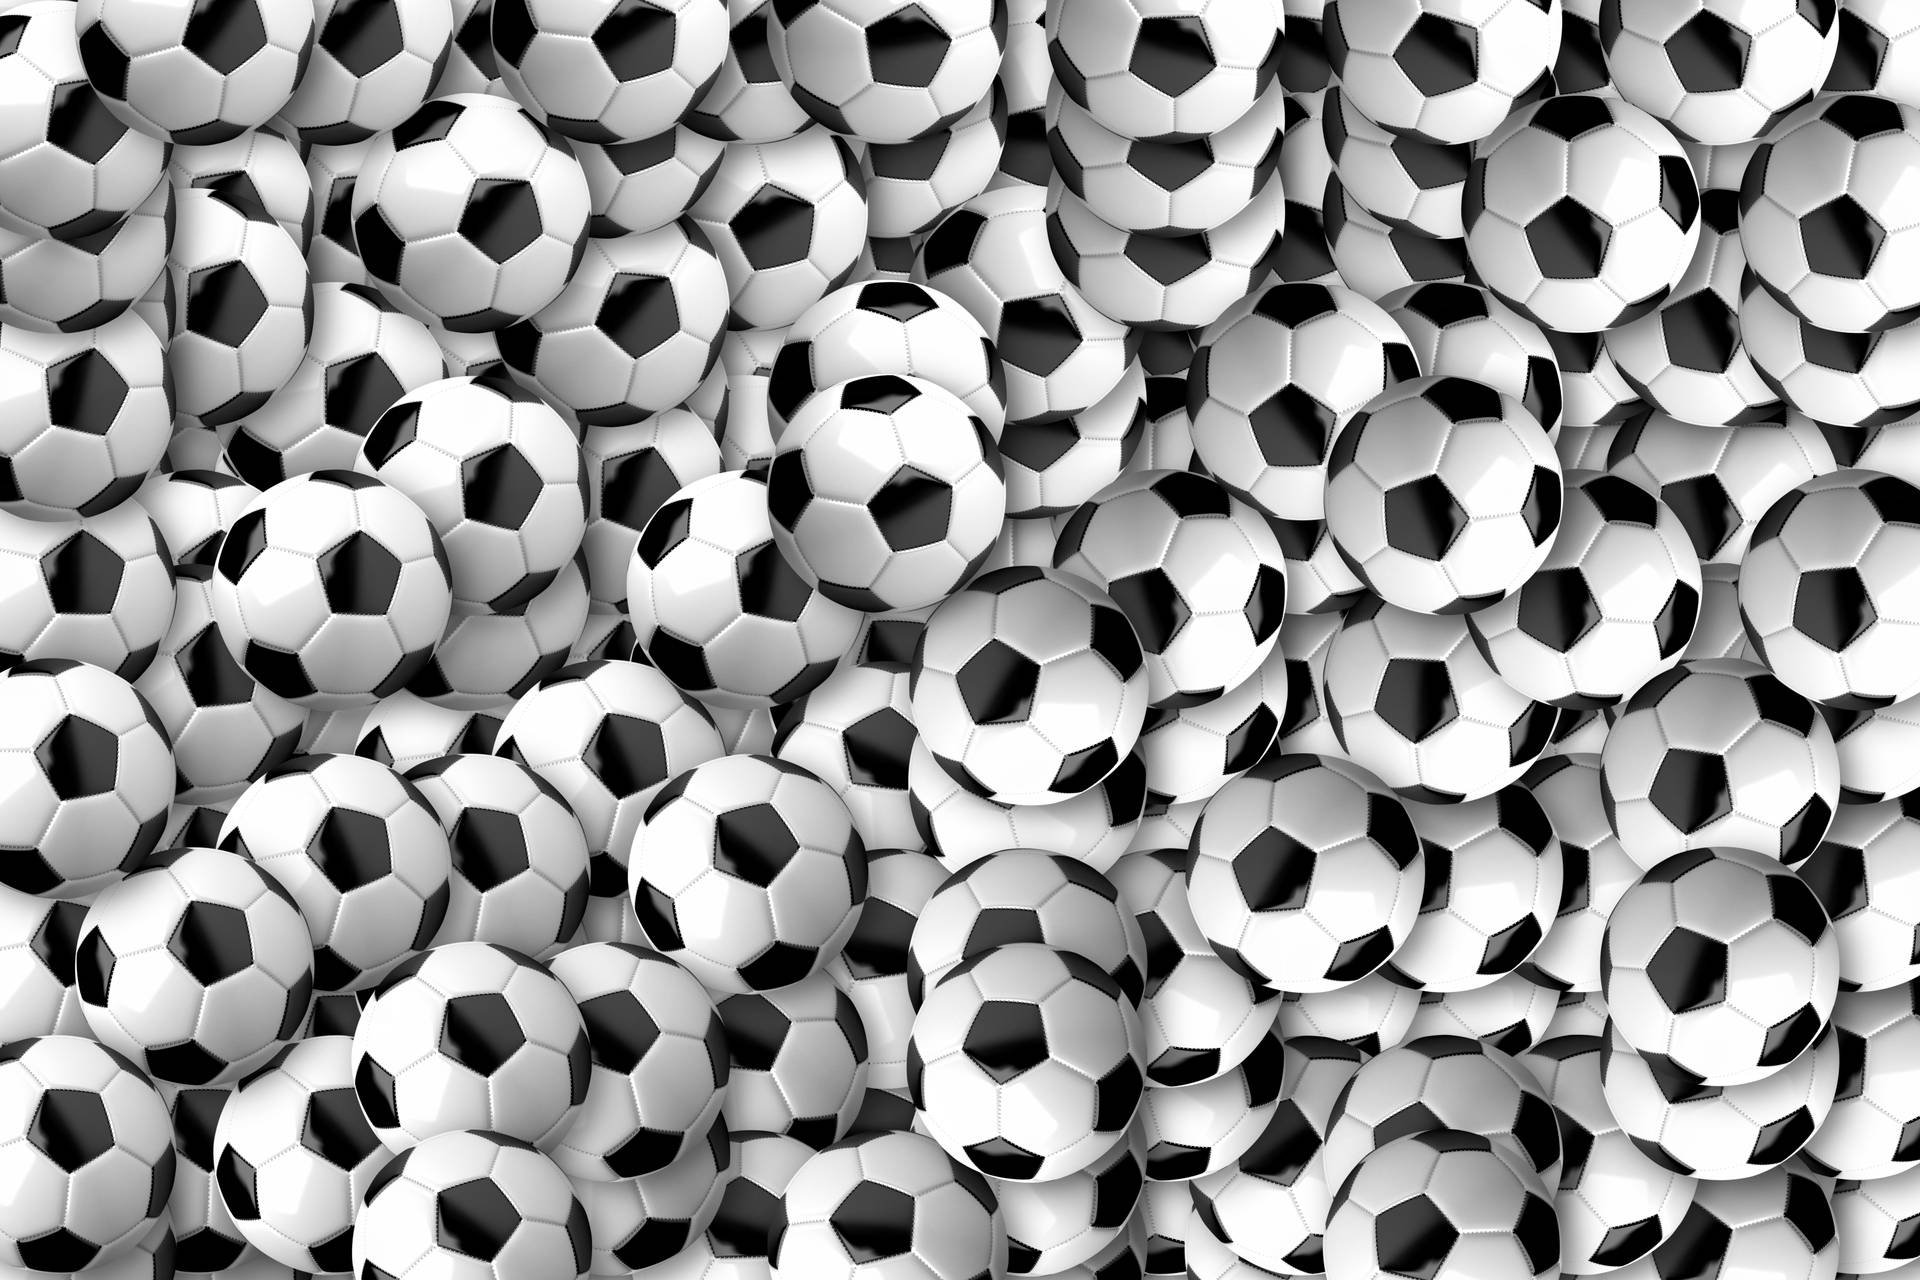 Numerous Soccer Balls Background